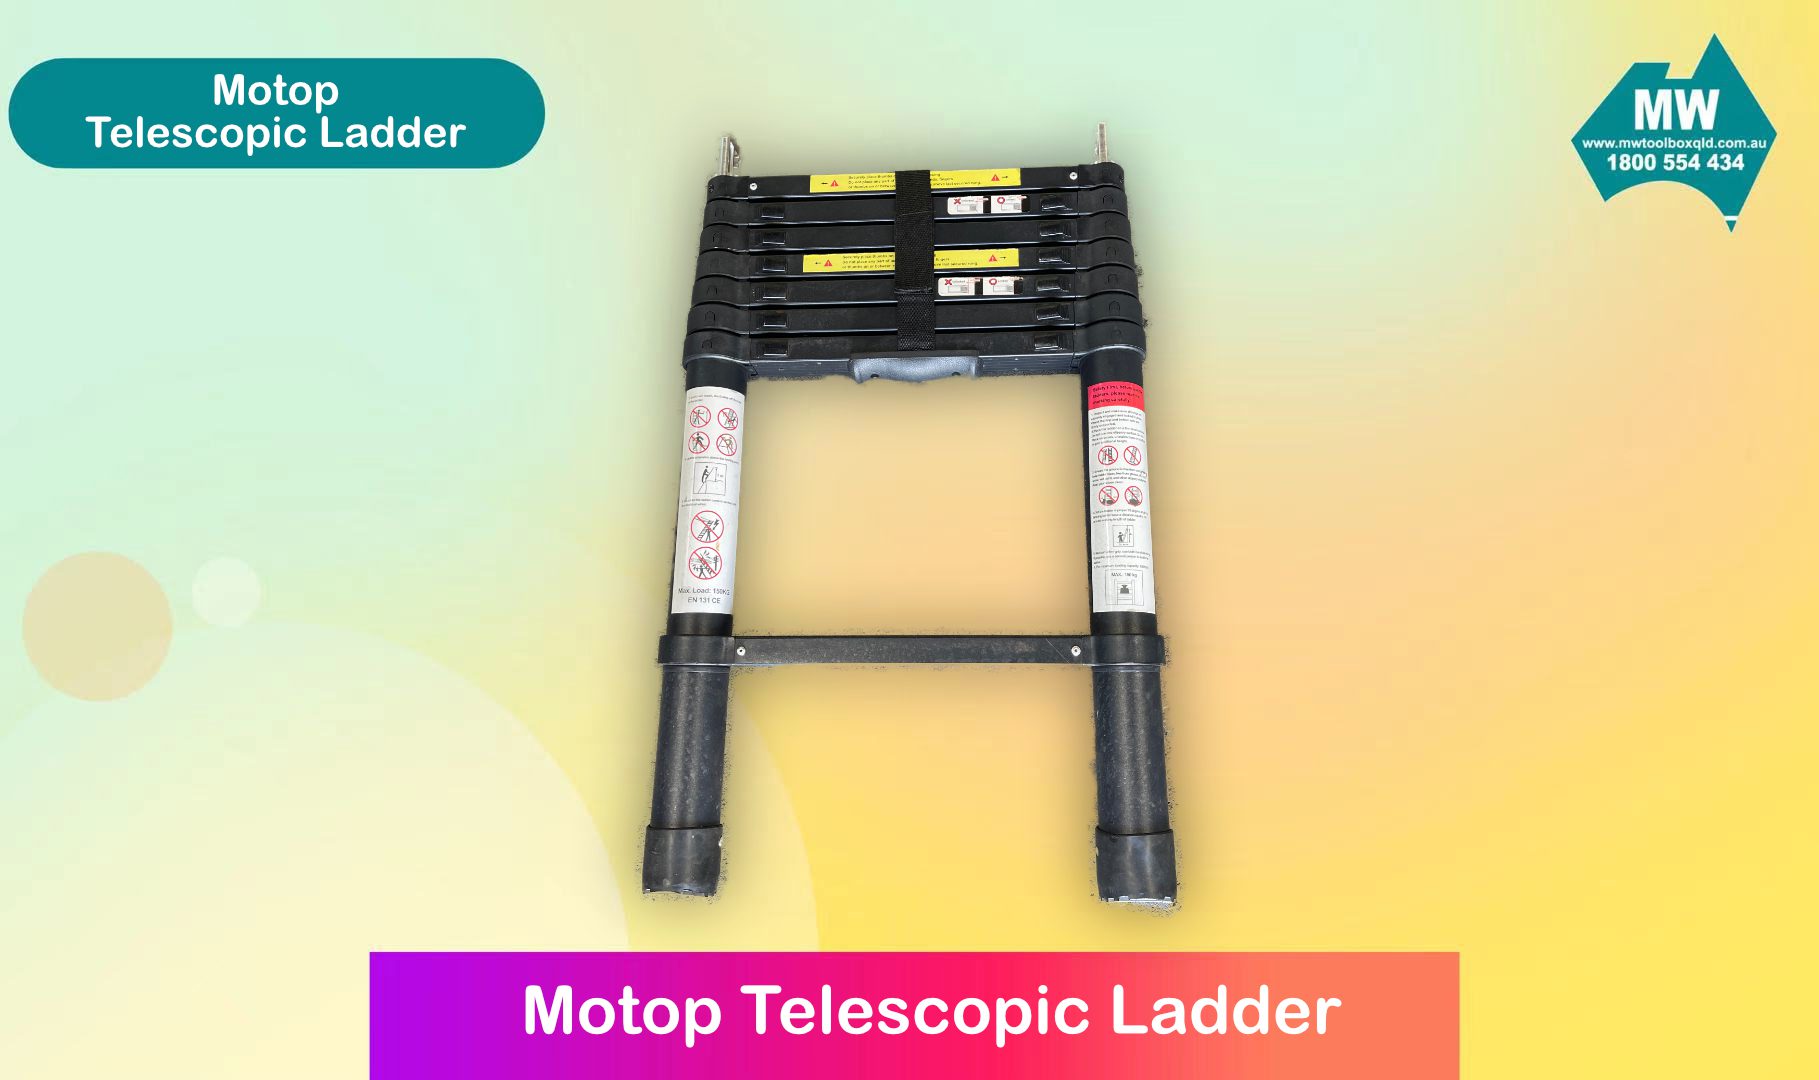 Motop telescopic ladder